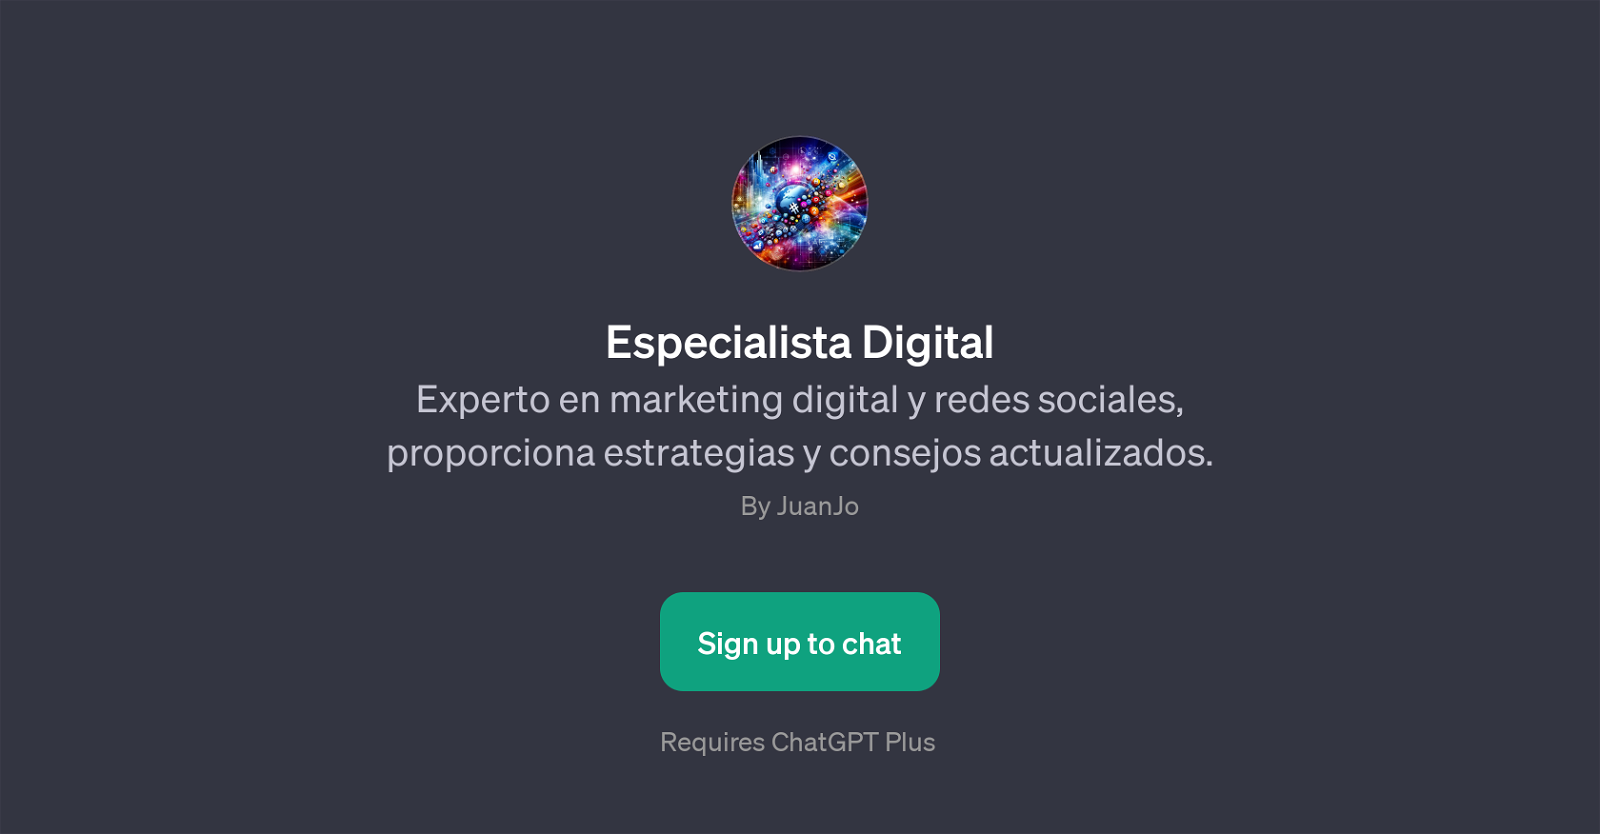 Especialista Digital website